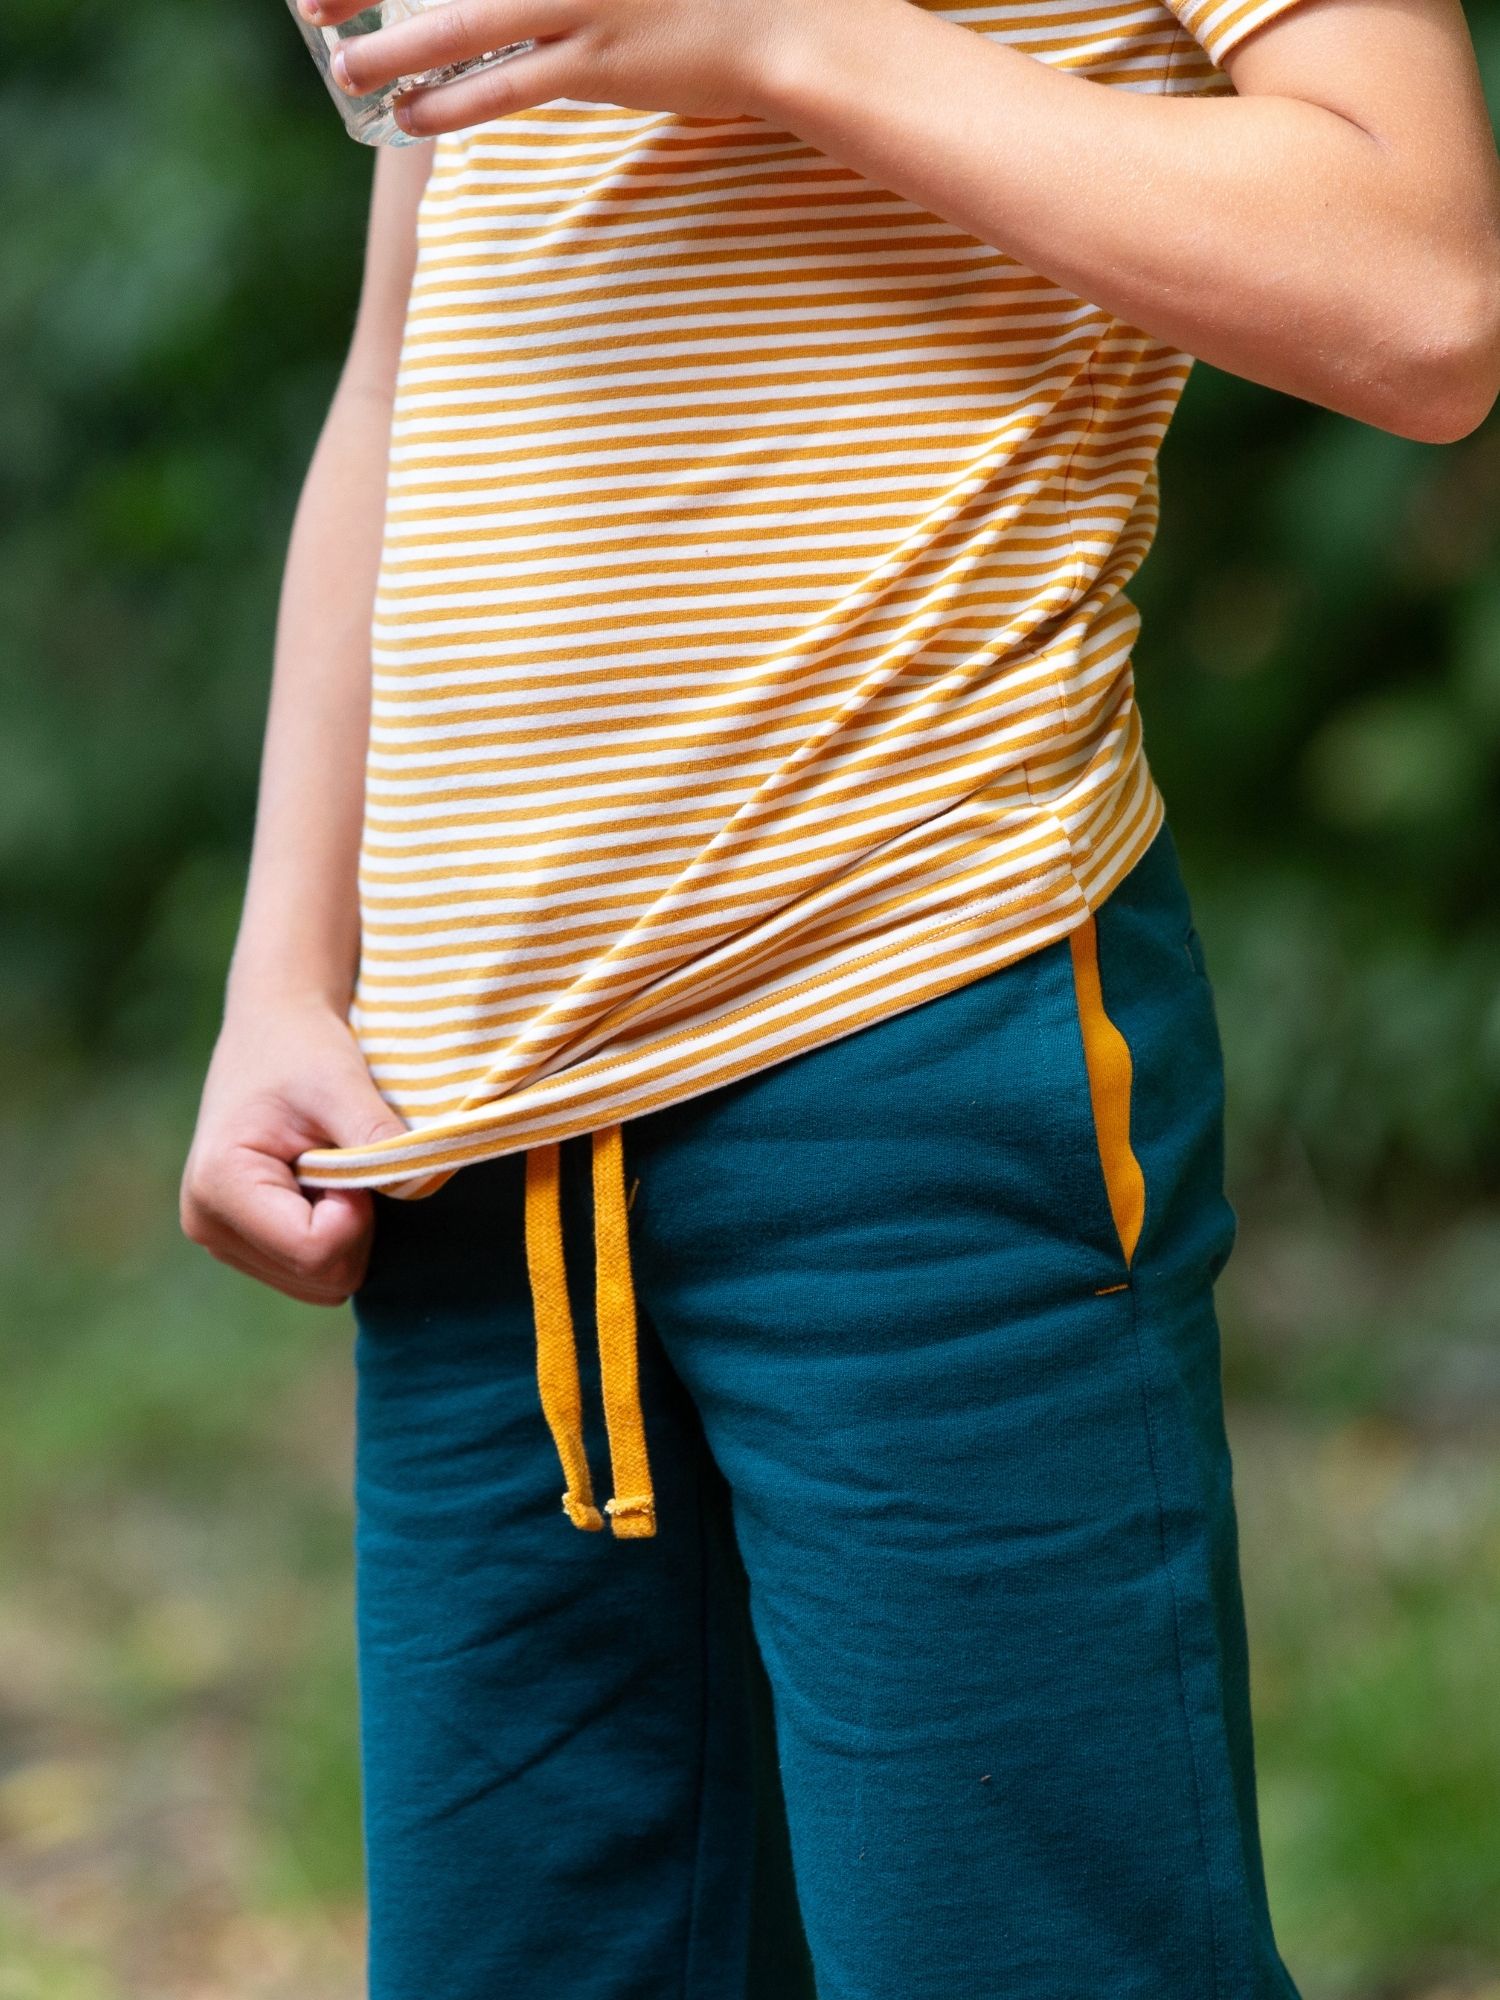 Little Green Radicals Baby Organic Cotton Soft Stripe Short Sleeve T-Shirt, Gold, 3-4 years